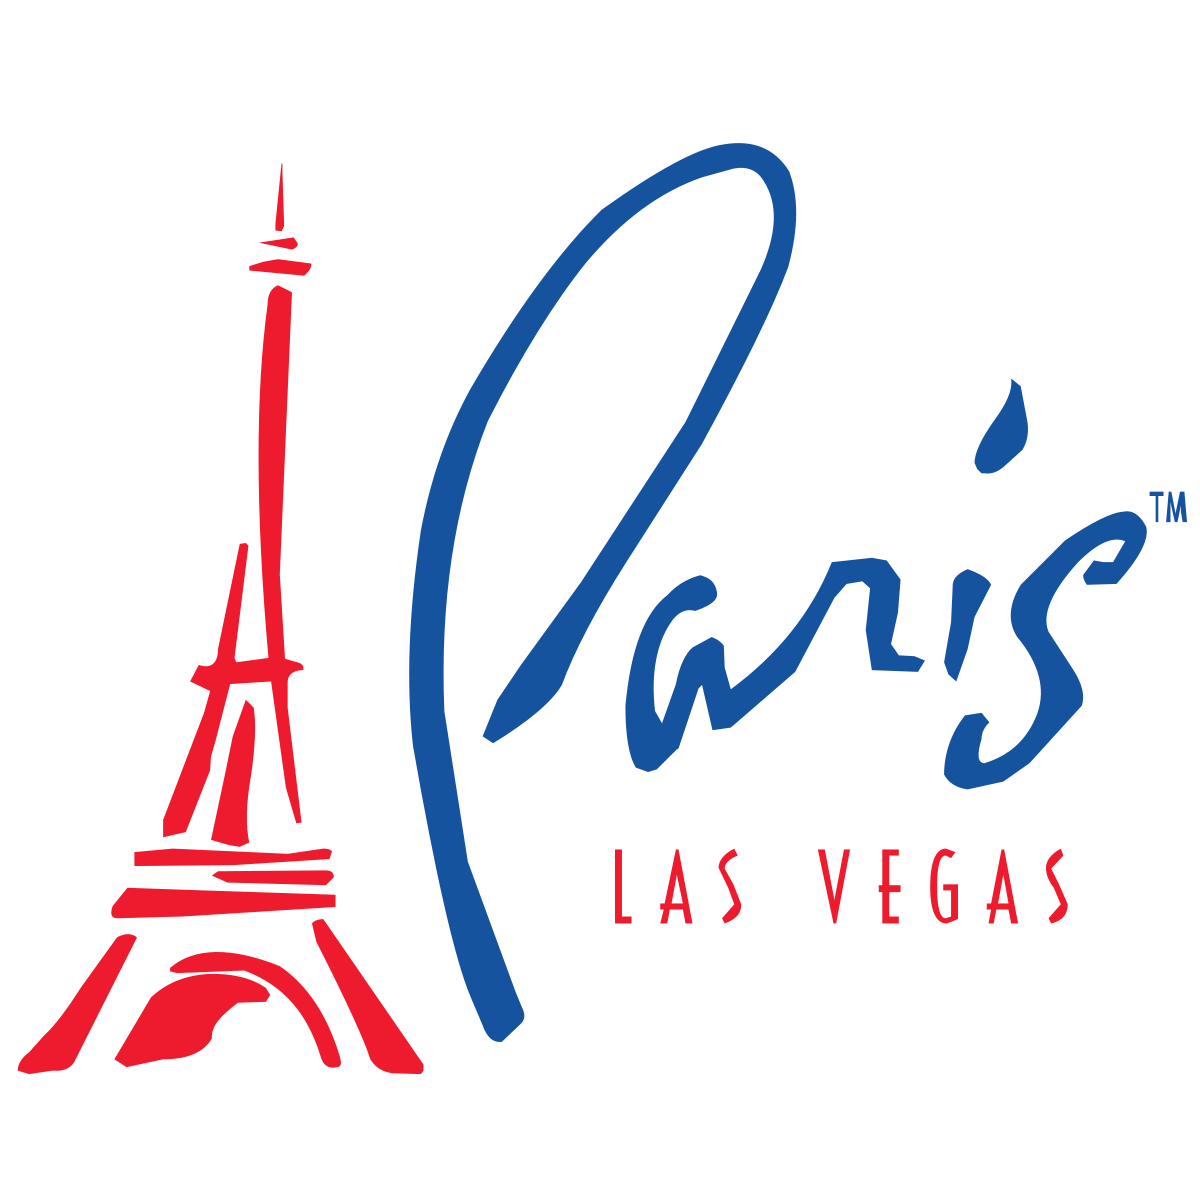 Fiesta Station Logo - Paris Las Vegas